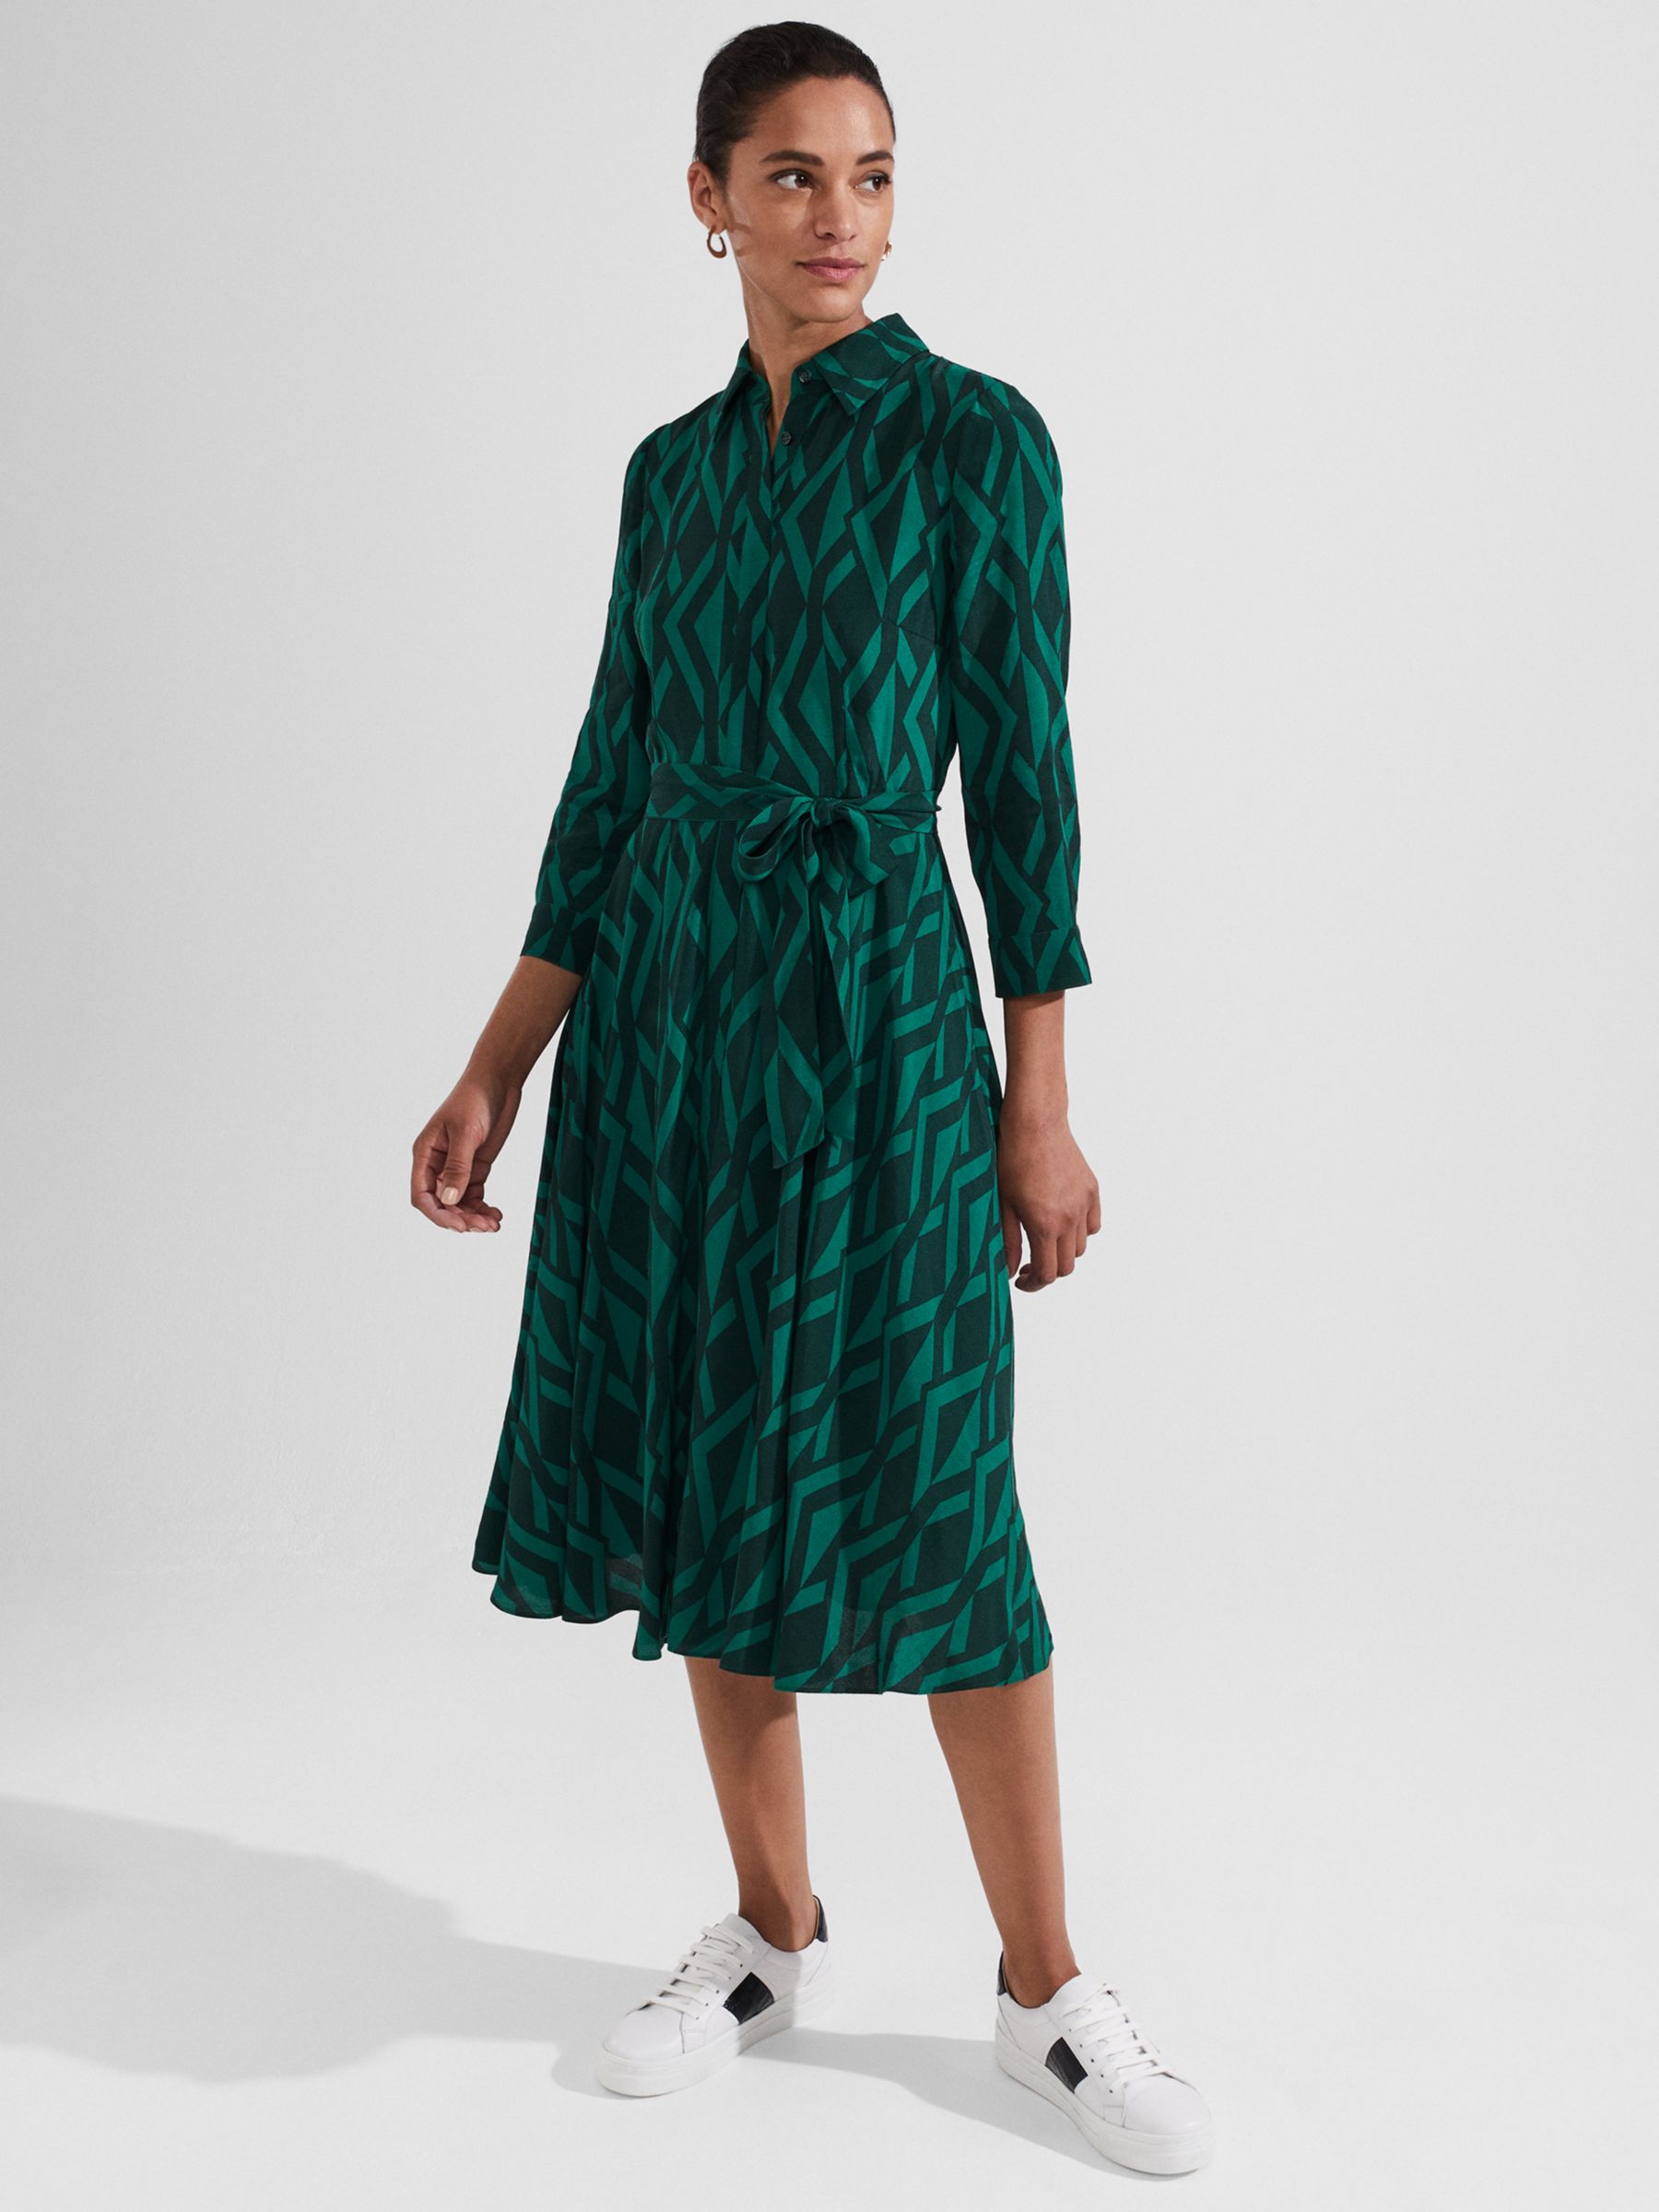 Hobbs Lainey Shirt Dress, Green/Multi at John Lewis & Partners